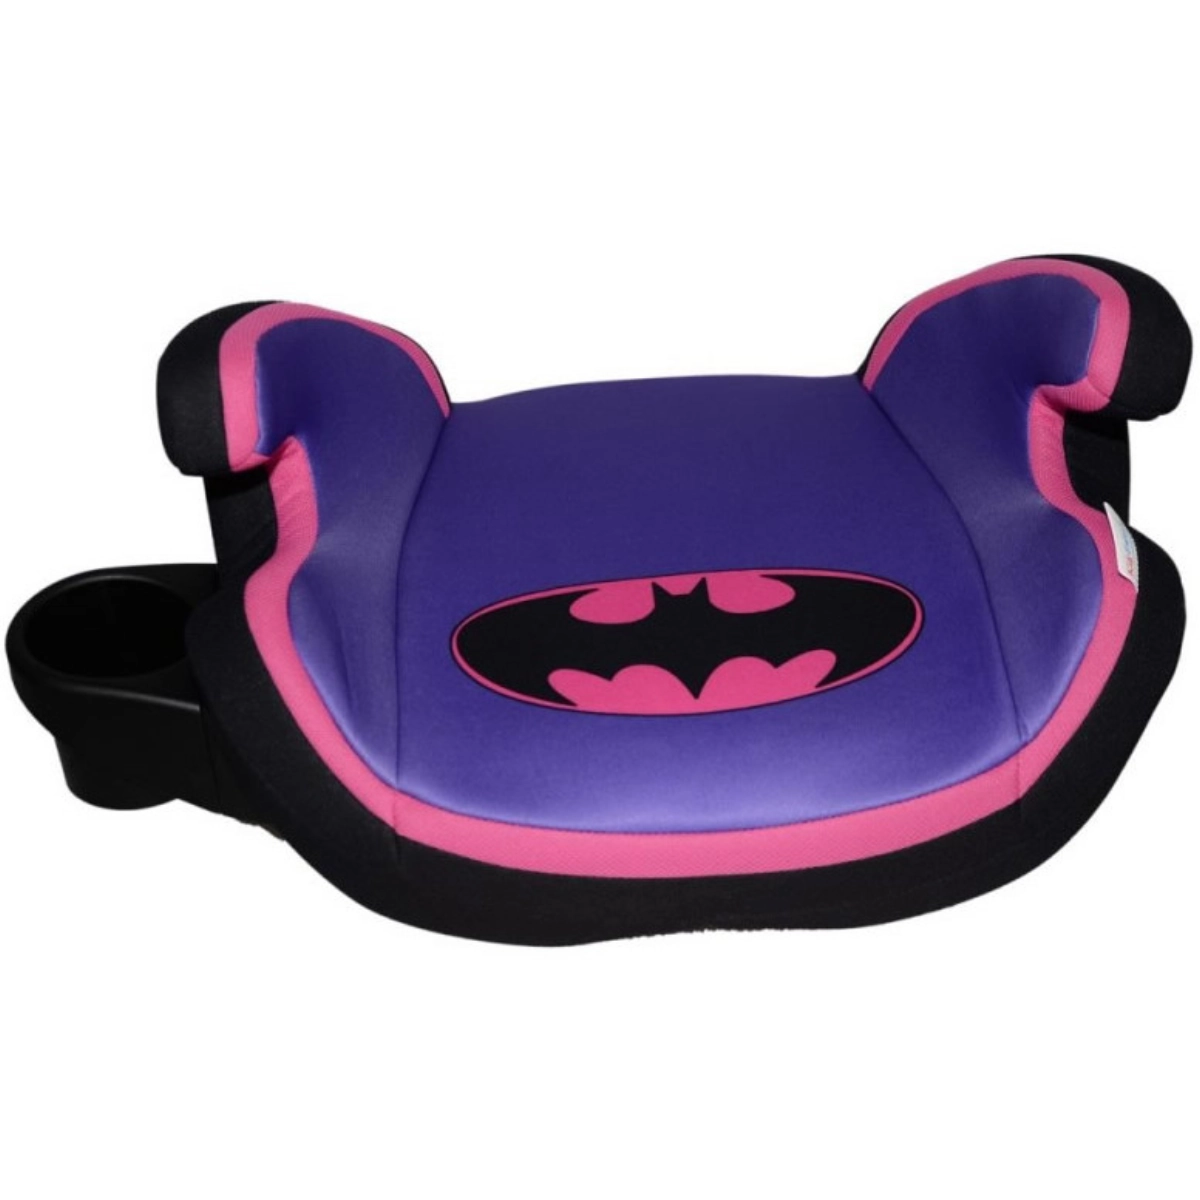 Kids Embrace Group 2/3 Booster seat-Batgirl from Kiddies Kingdom